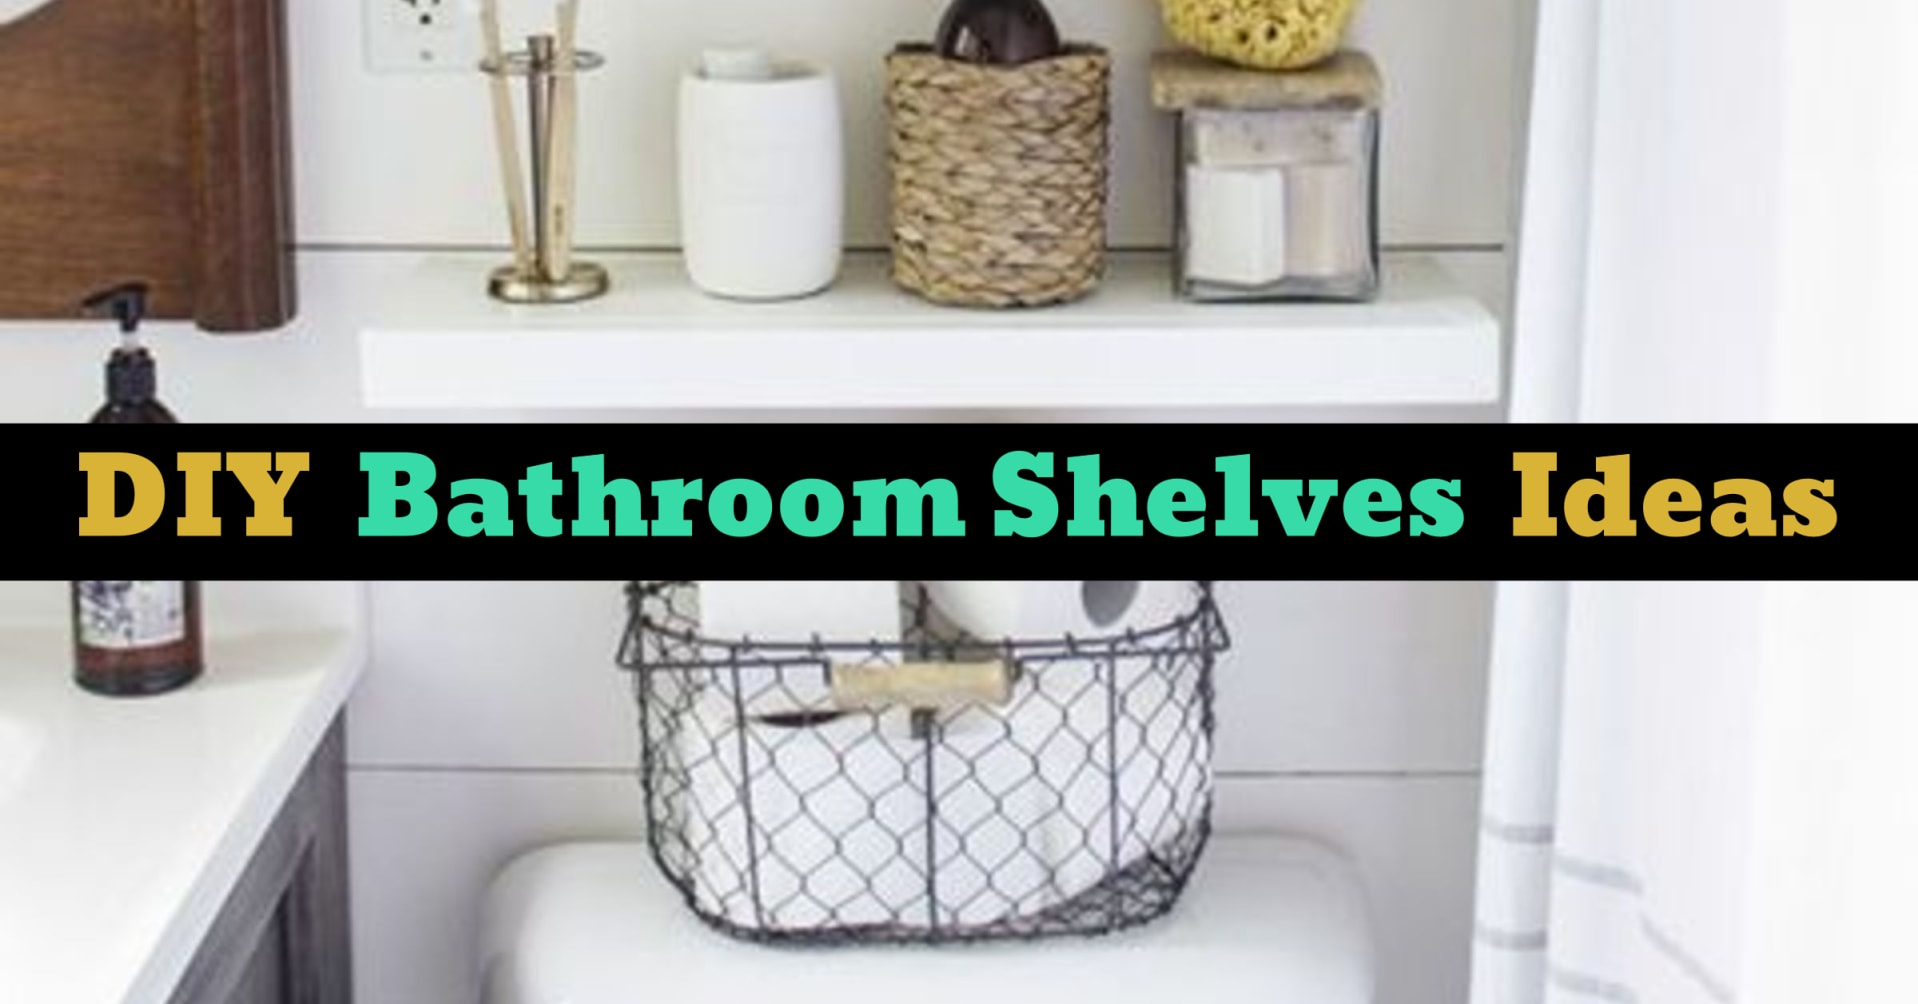 Bathroom Shelves Ideas - Small Bathroom Shelf Ideas For Creative Bathroom Storage On a Budget 